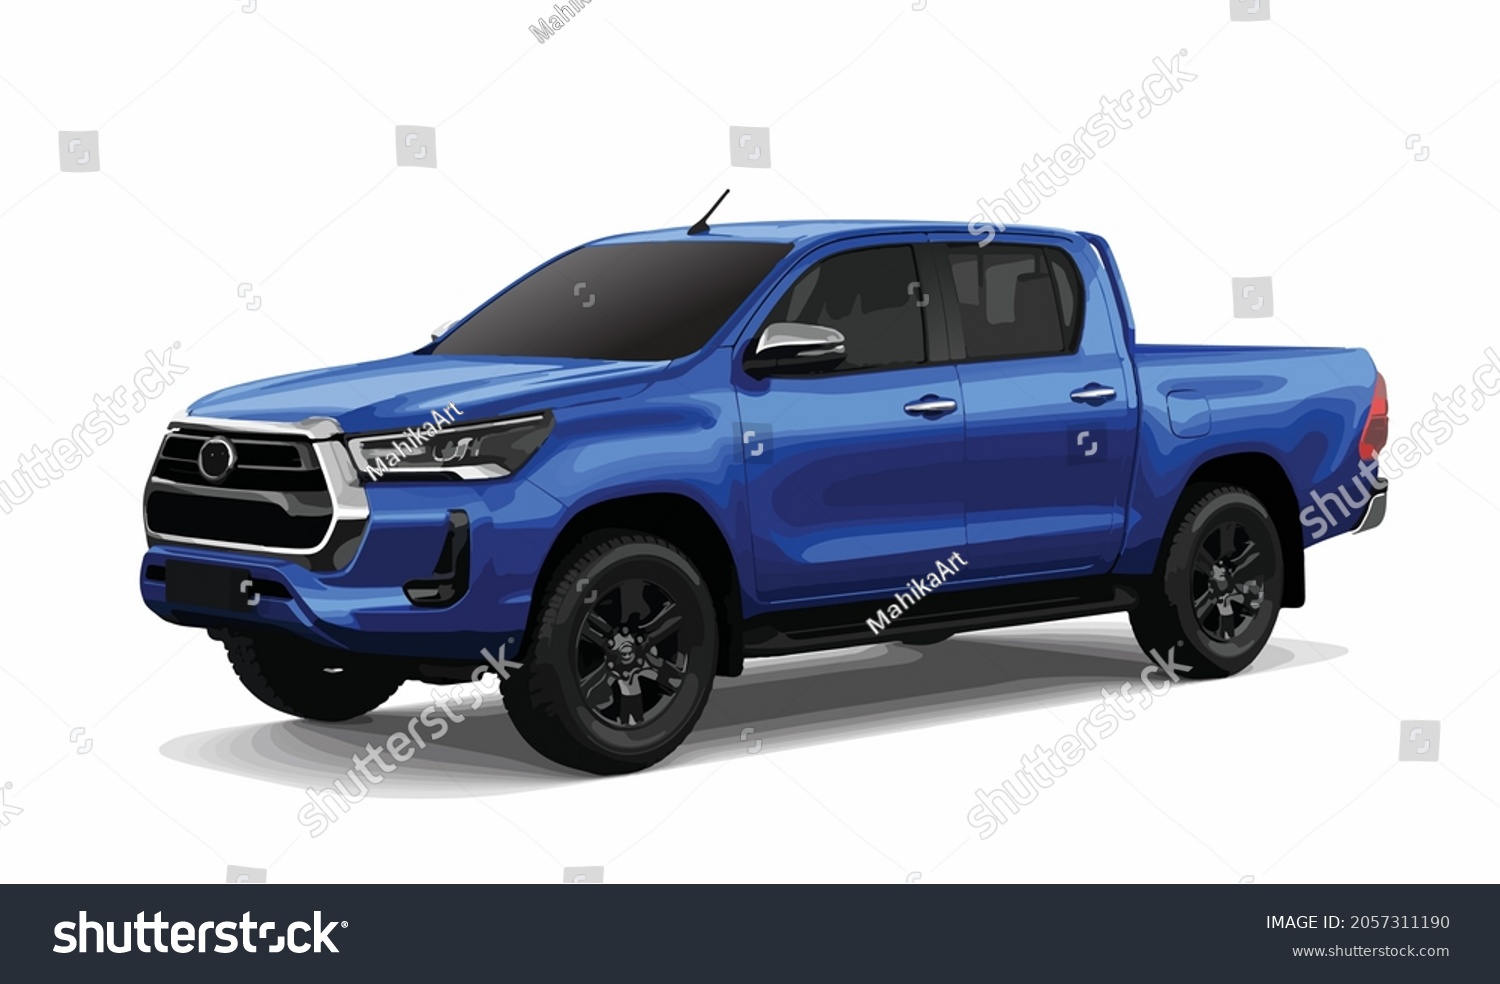 SVG of blue truck modern art design vector svg